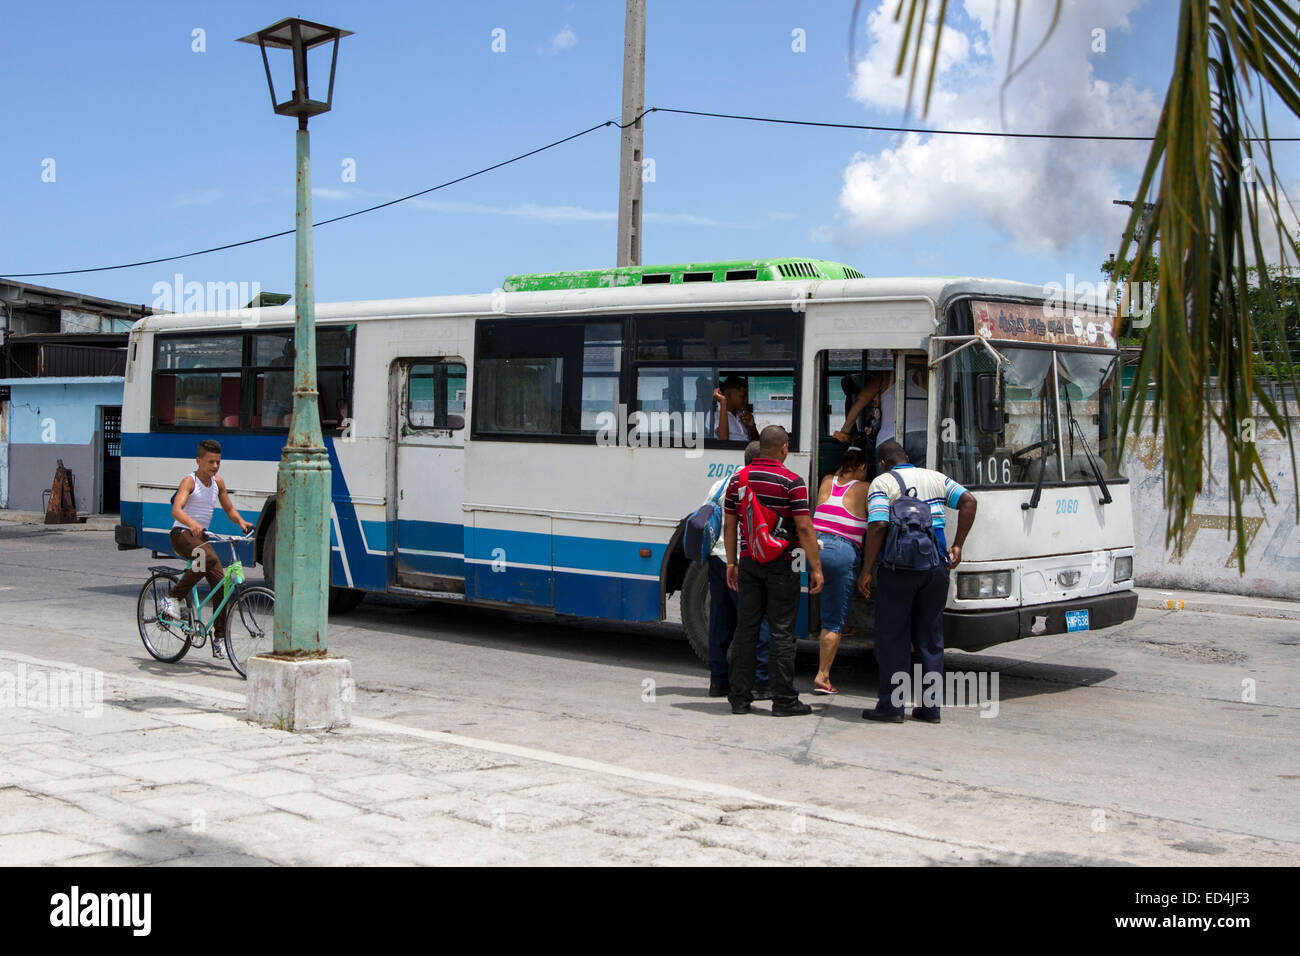 People getting on a bus in Havana, Cuba Stock Photo